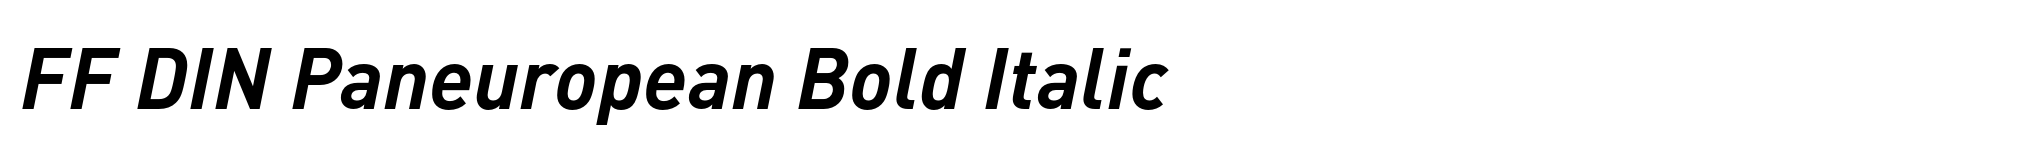 FF DIN Paneuropean Bold Italic image